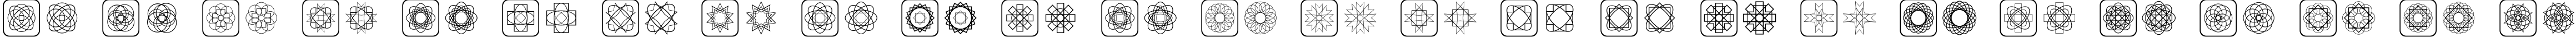 Пример написания английского алфавита шрифтом Symmetric Things